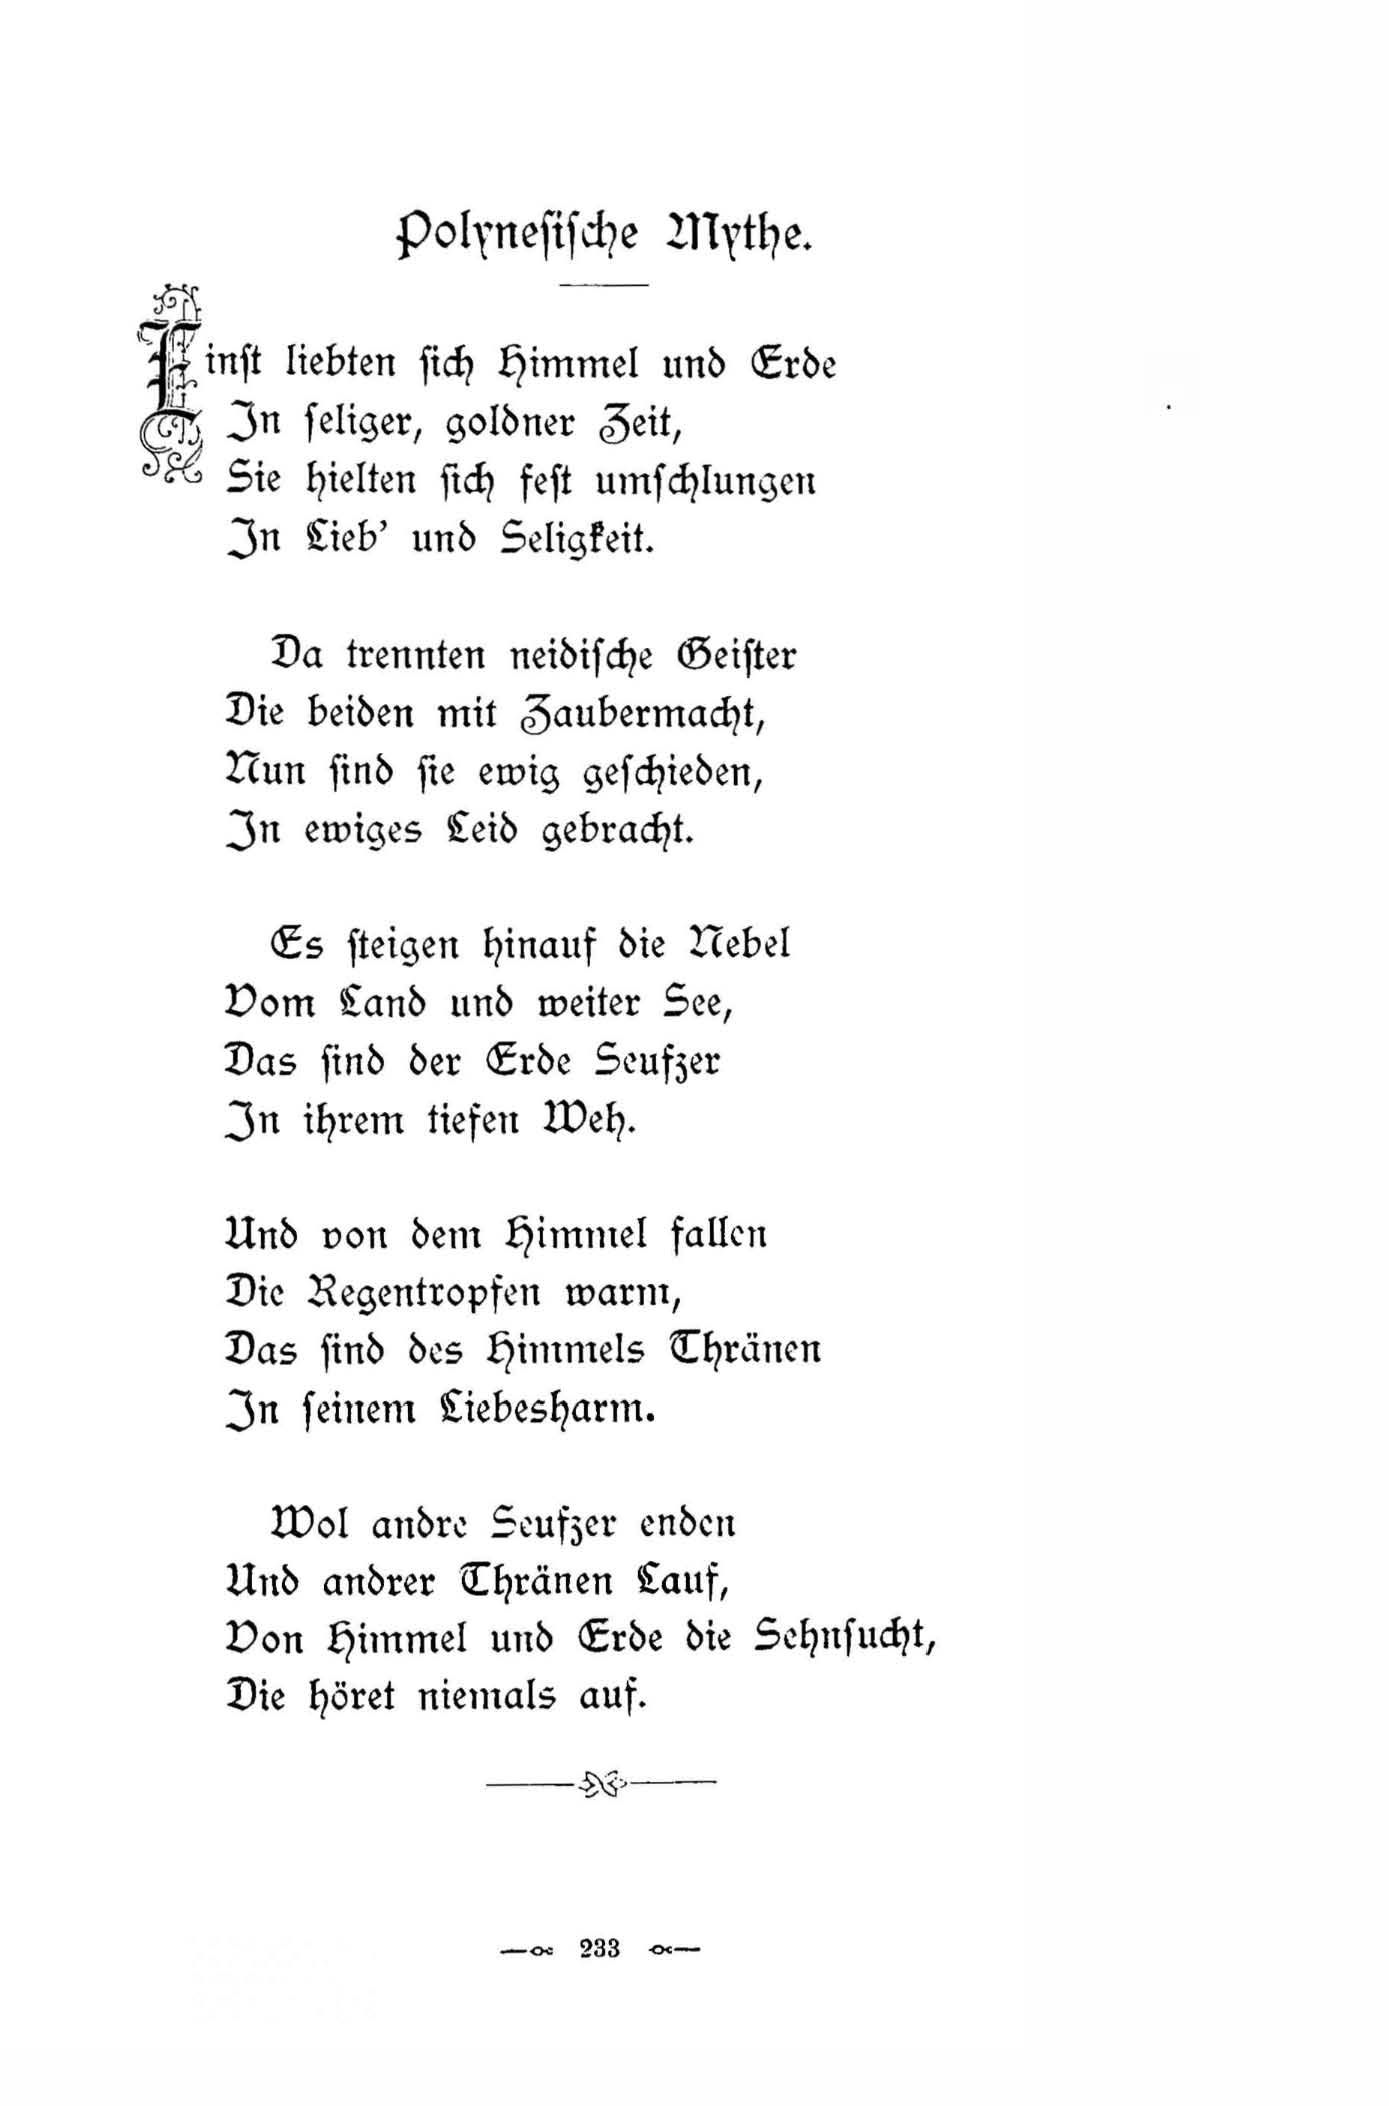 Polynesische Mythe (1896) | 1. (233) Main body of text